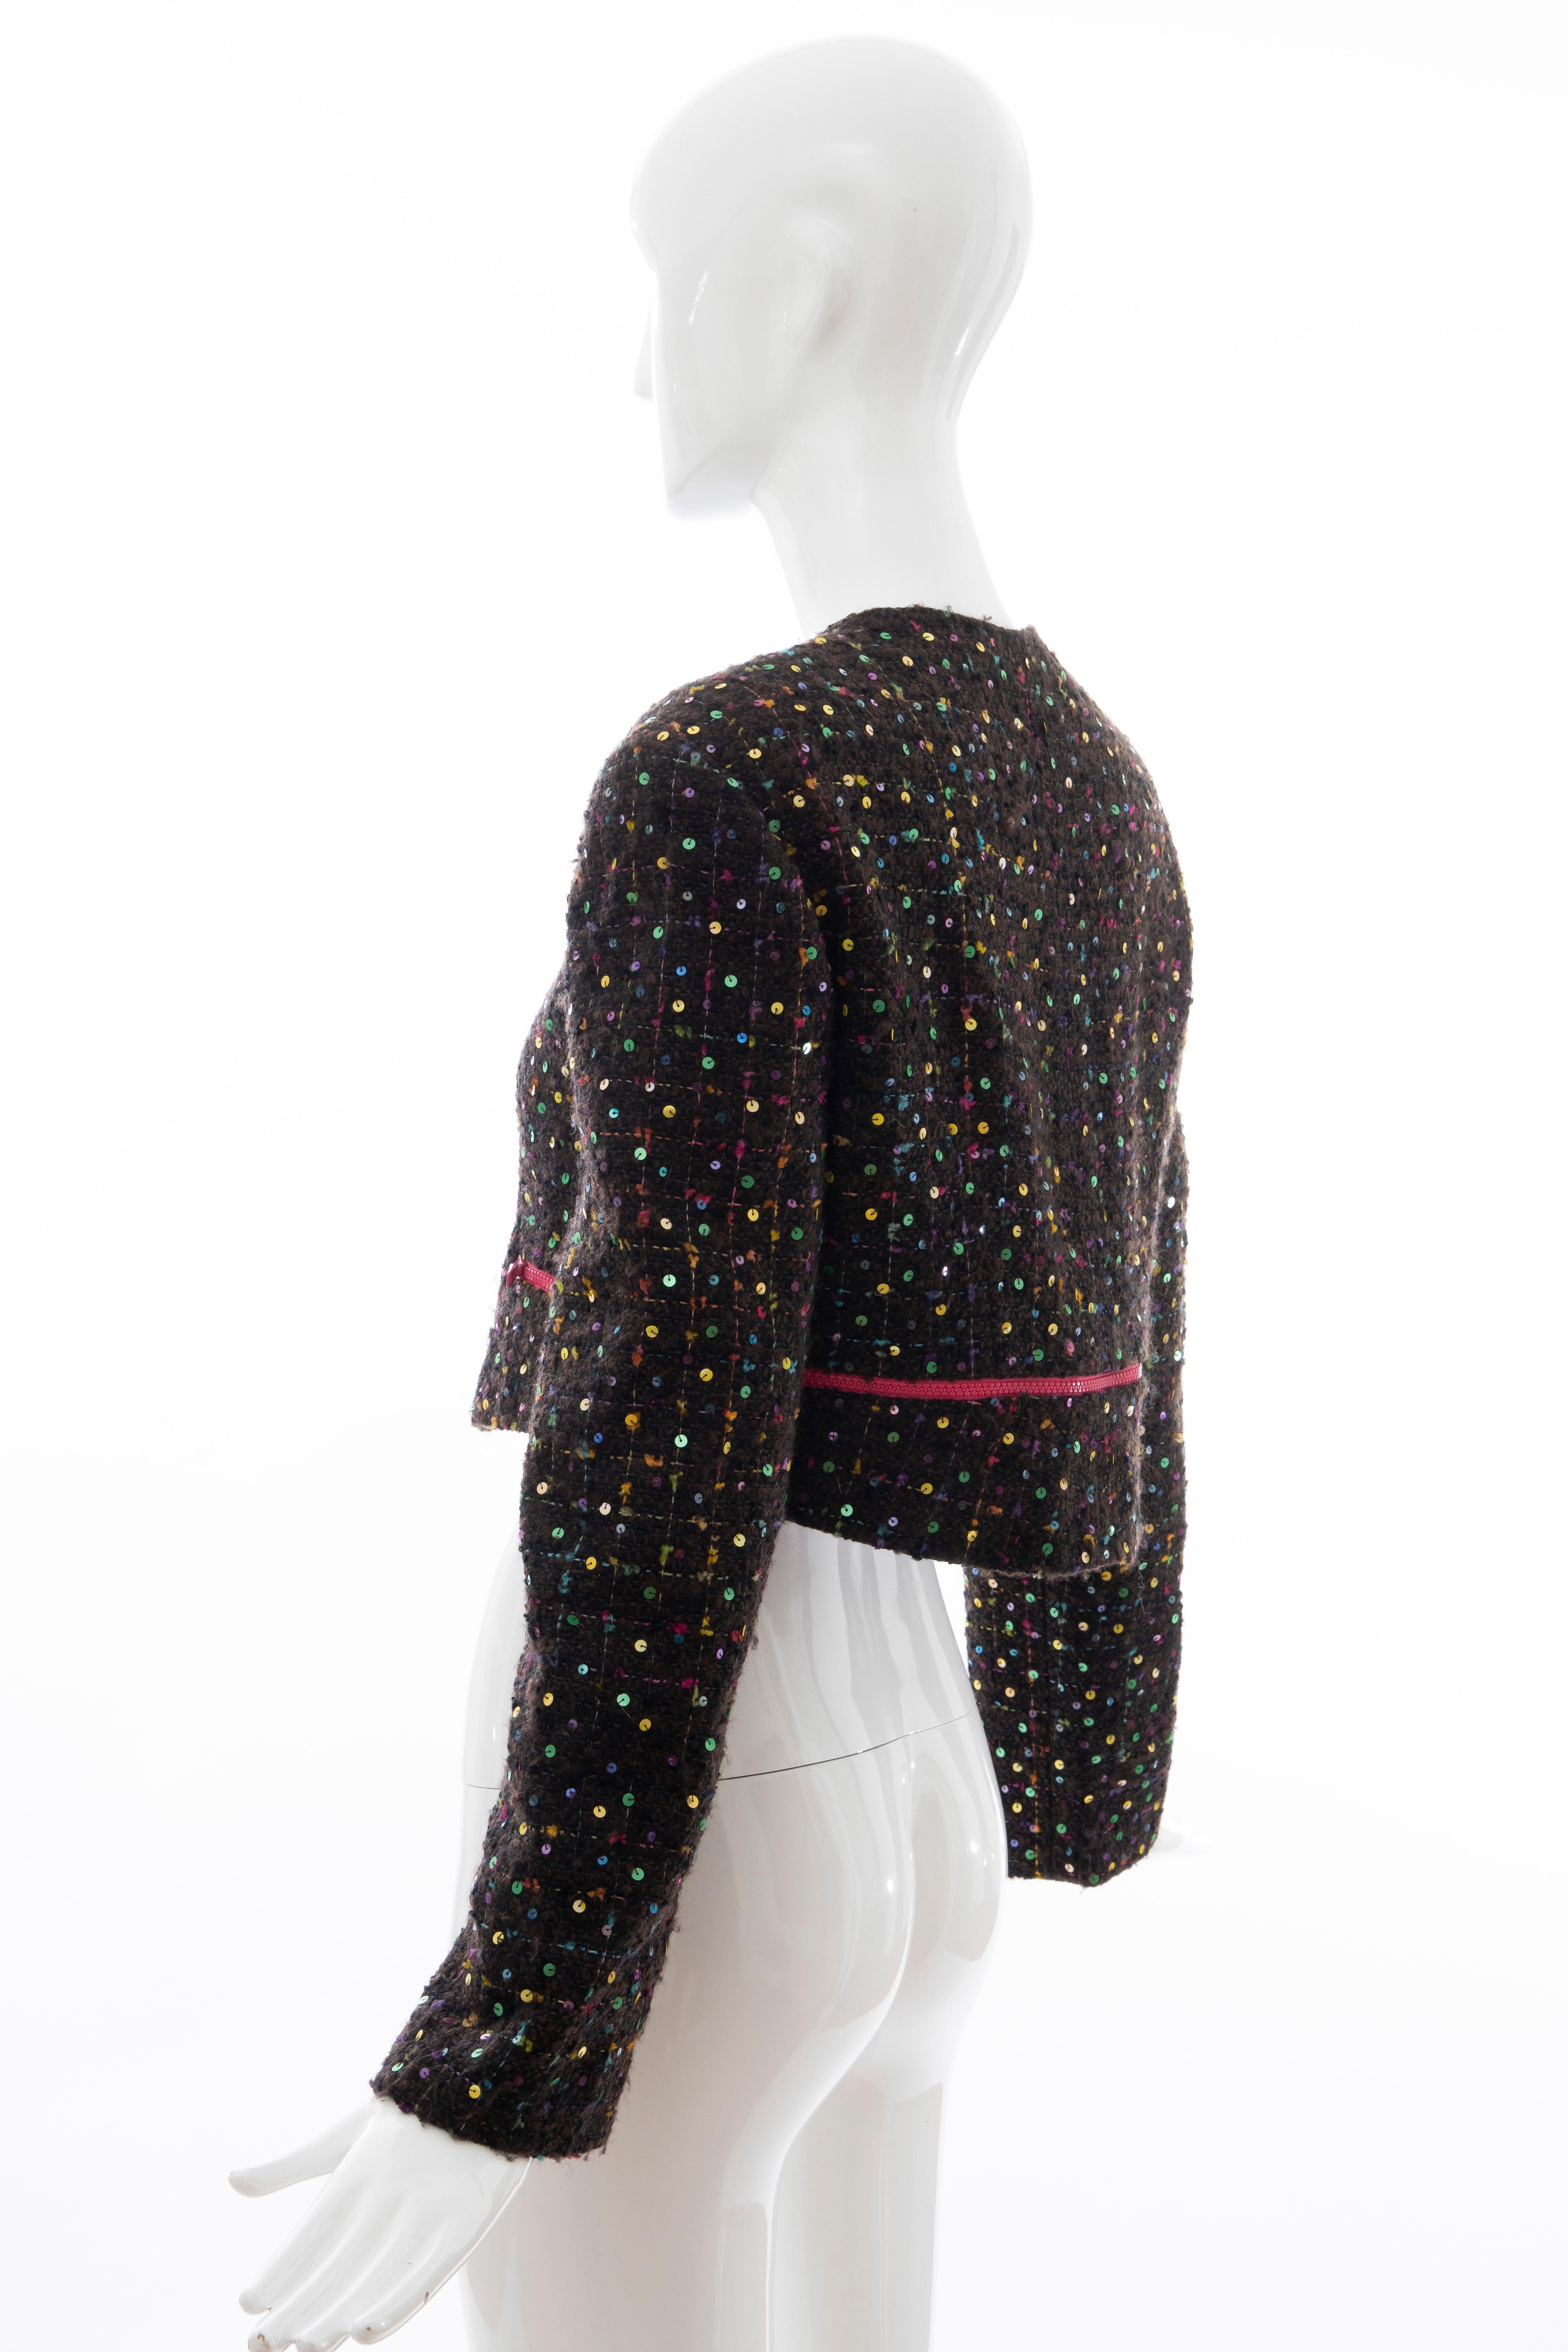 Geoffrey Beene Tweed Polychrome Sequined Bolero Jacket, Spring 1989 For Sale 6